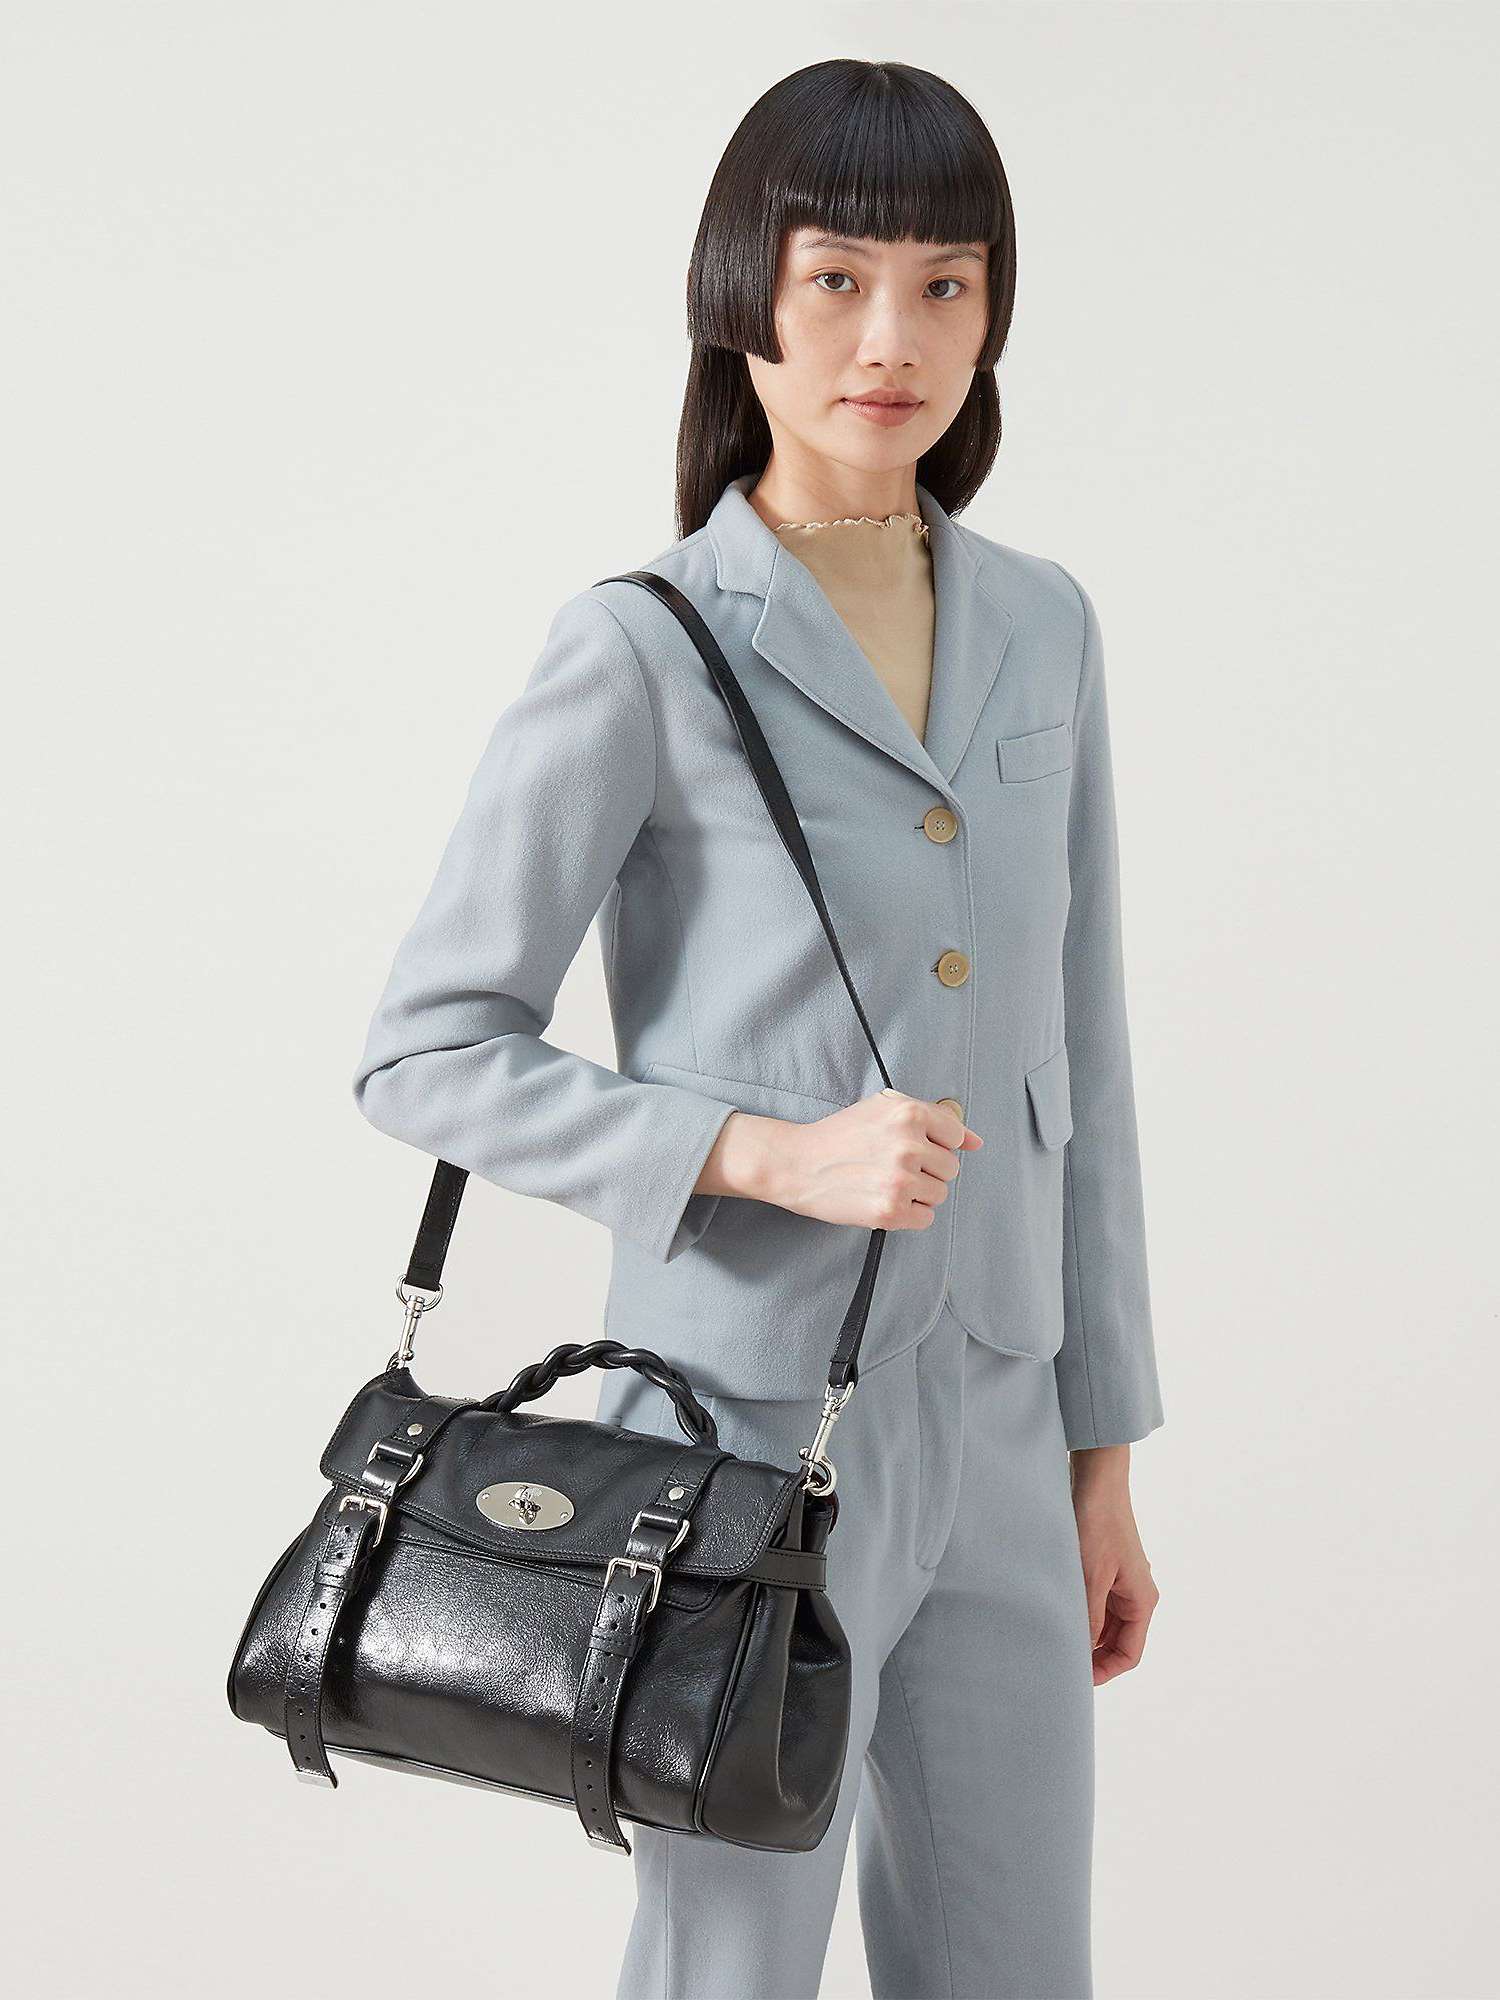 Buy Mulberry Alexa High Shine Leather Shoulder Bag Online at johnlewis.com